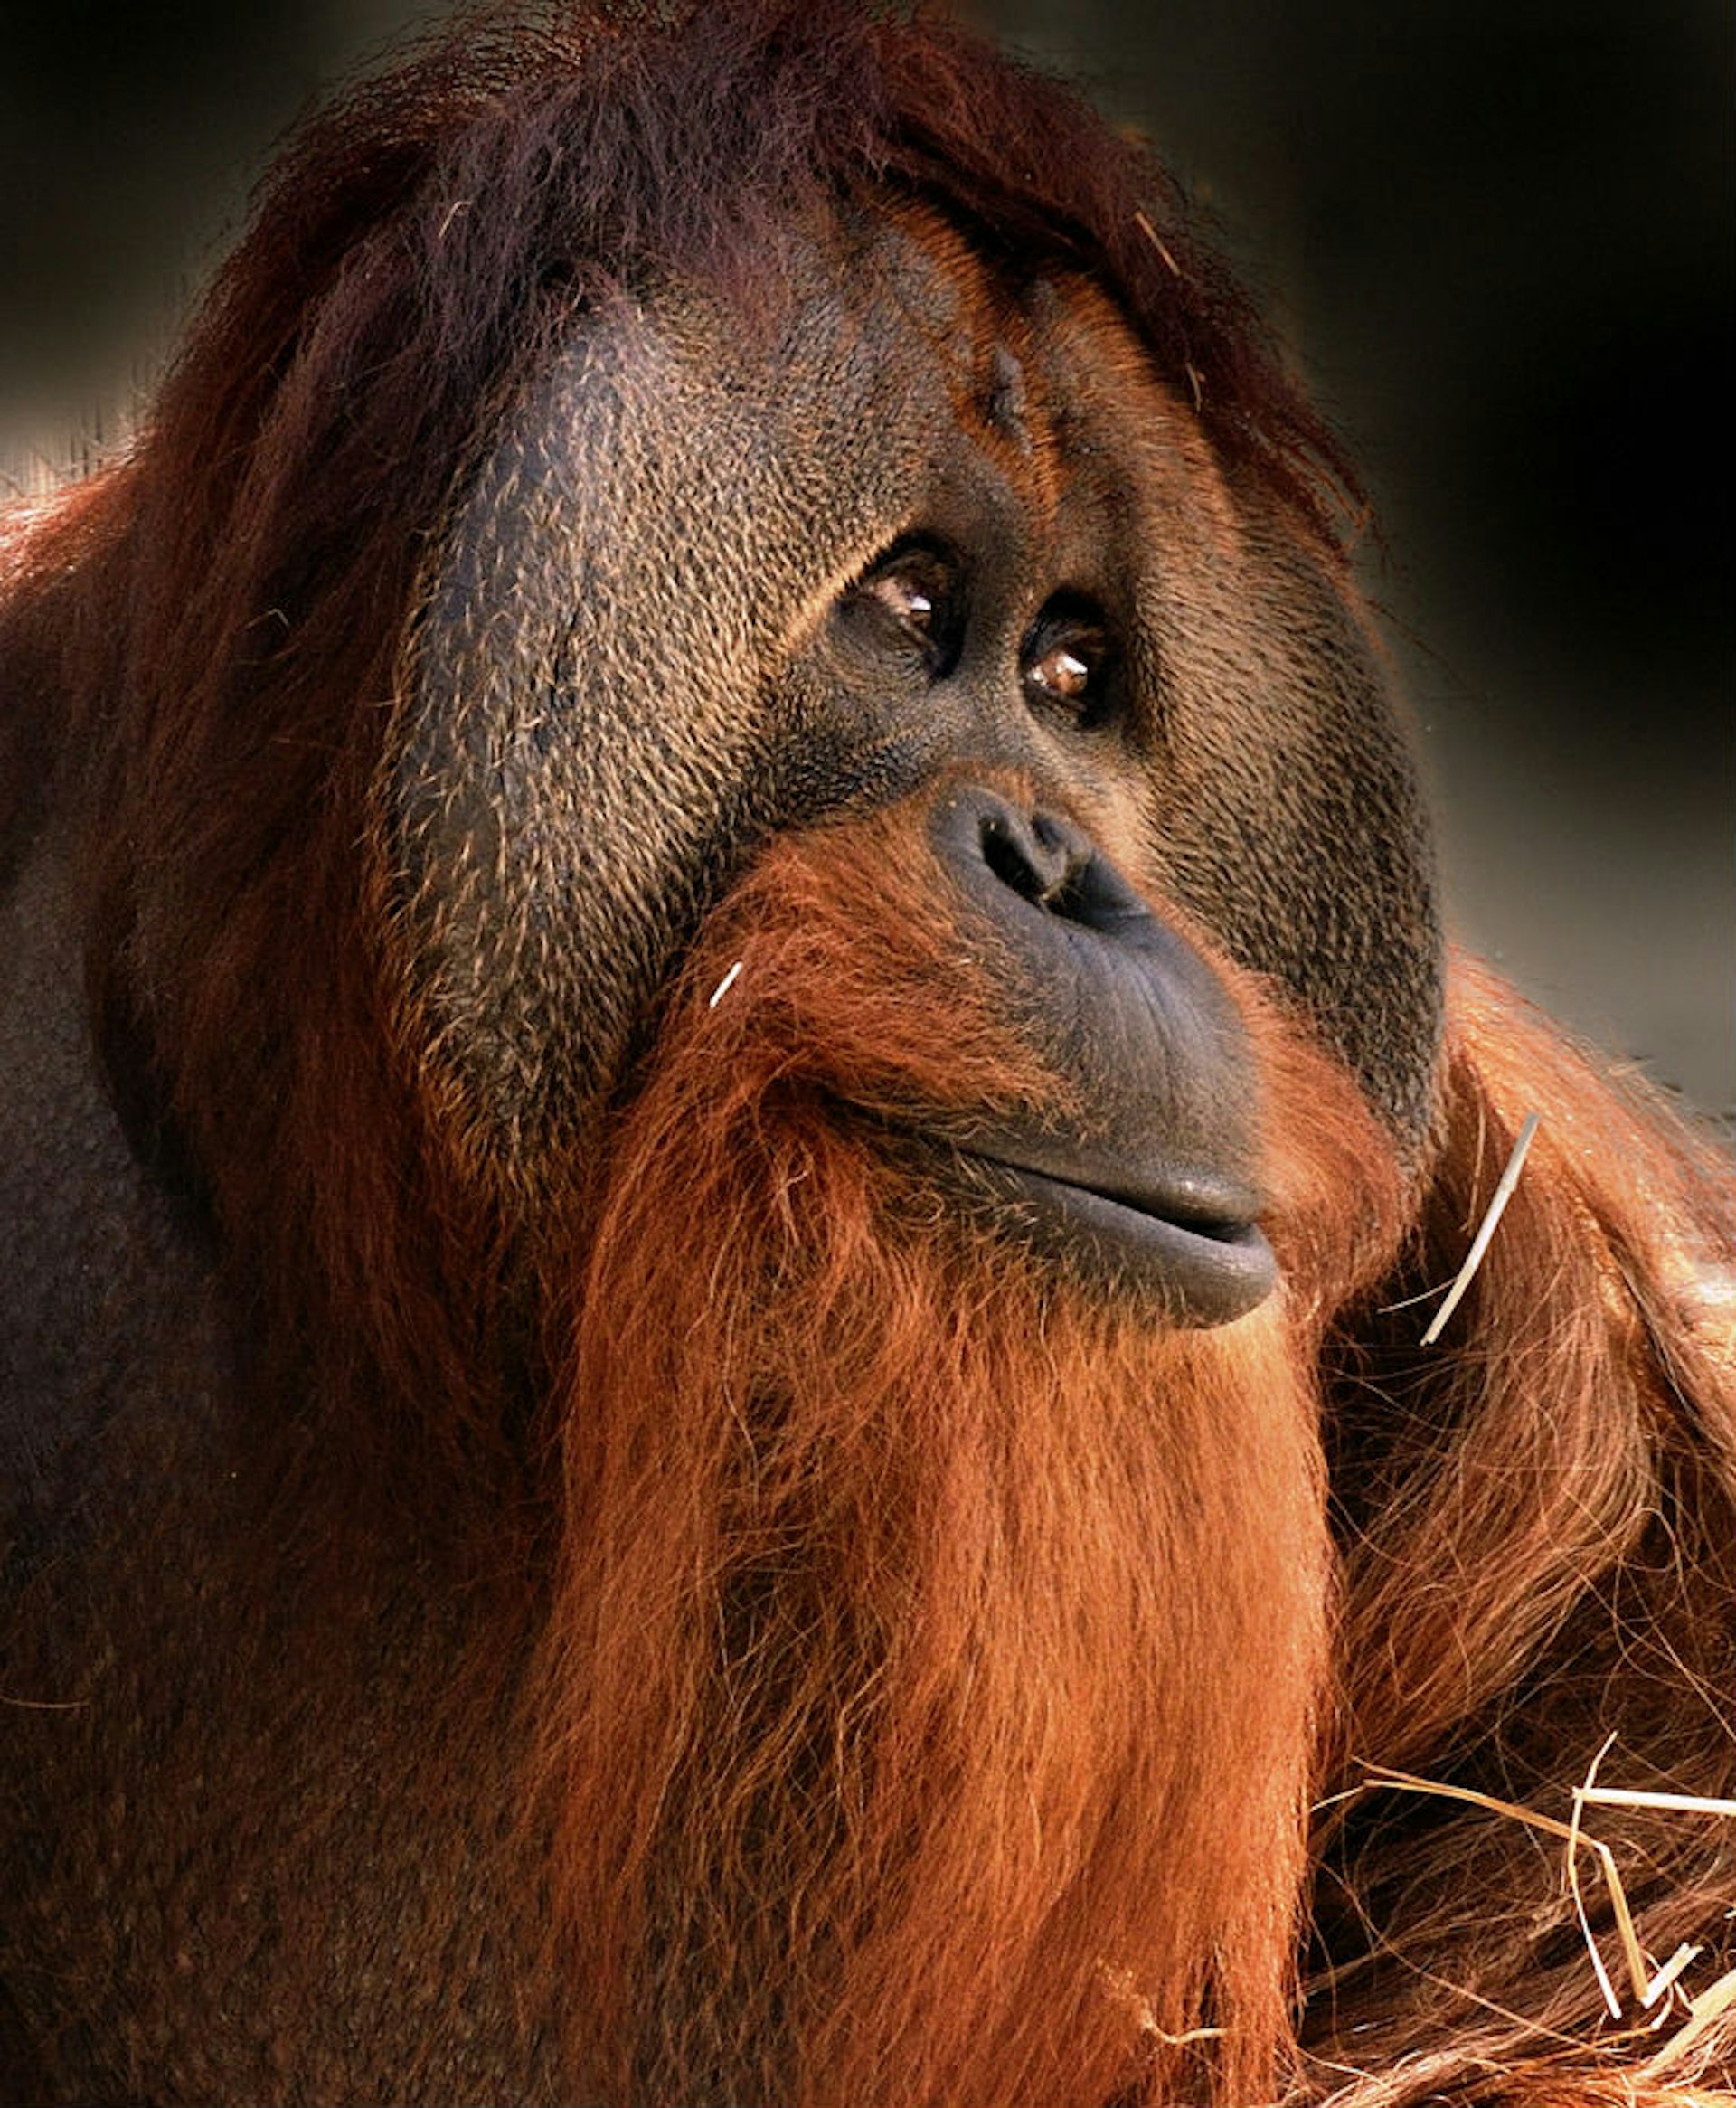 The new International Orangutan Center at the Indianapolis Zoo. Image courtesy of the Indianapolis Zoo.